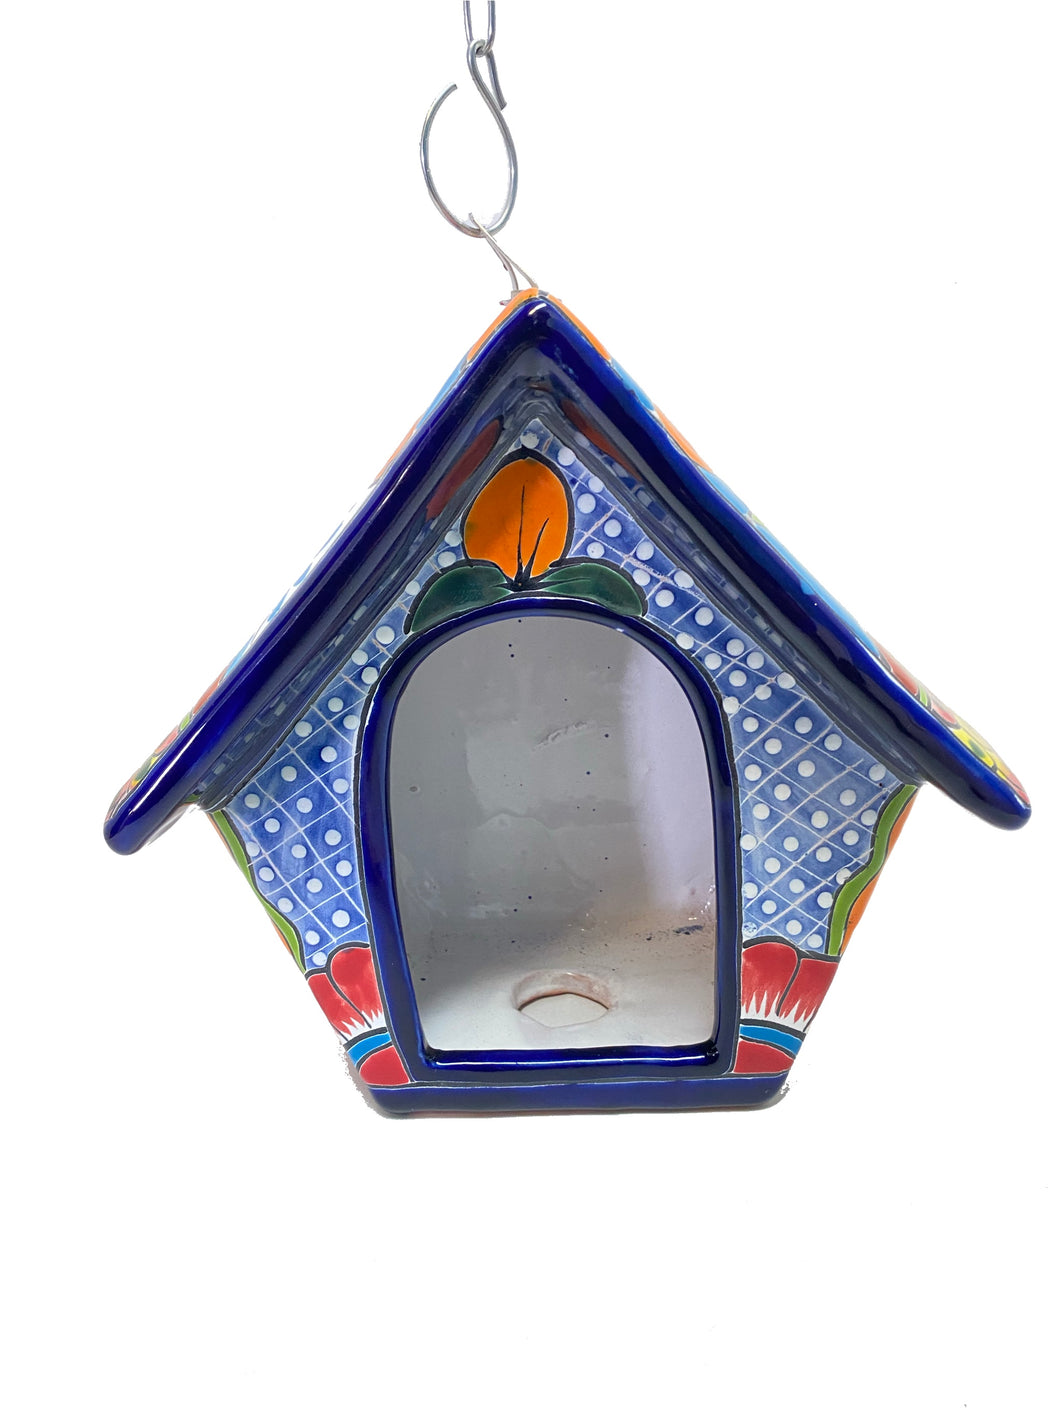 Hanging birdhouse